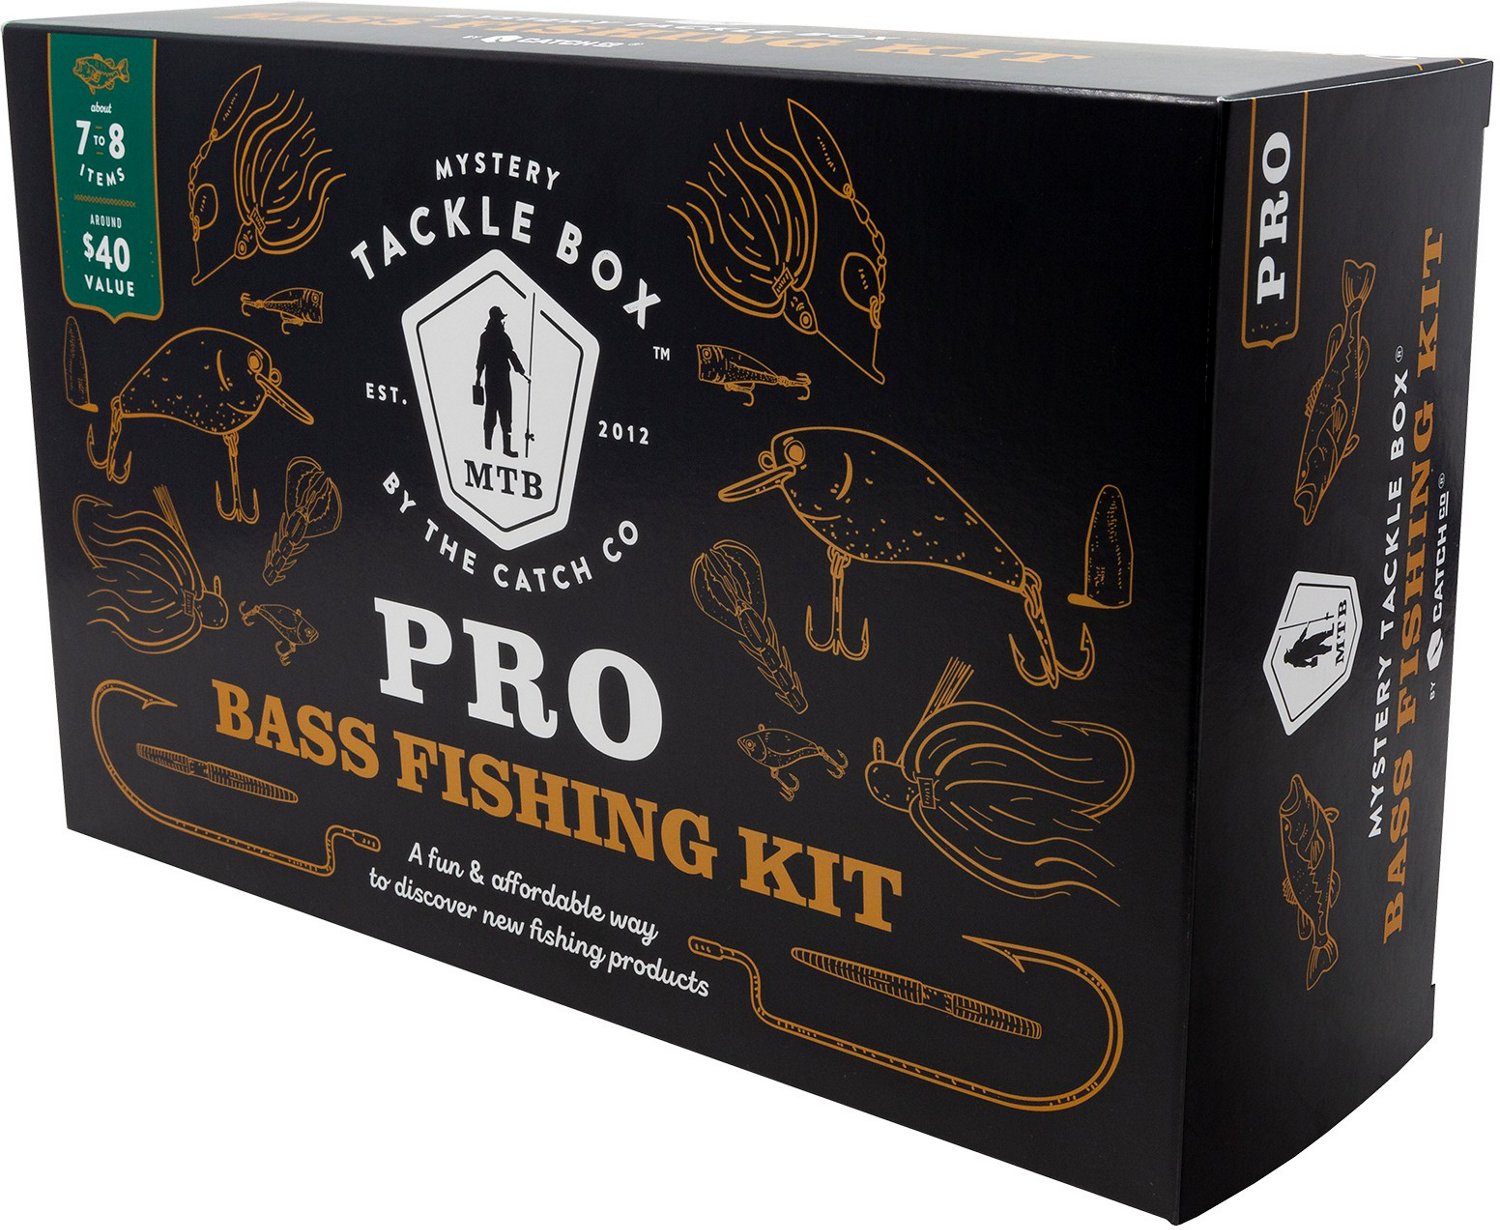 Mystery Tackle Box 826 Bass Fishing Kit